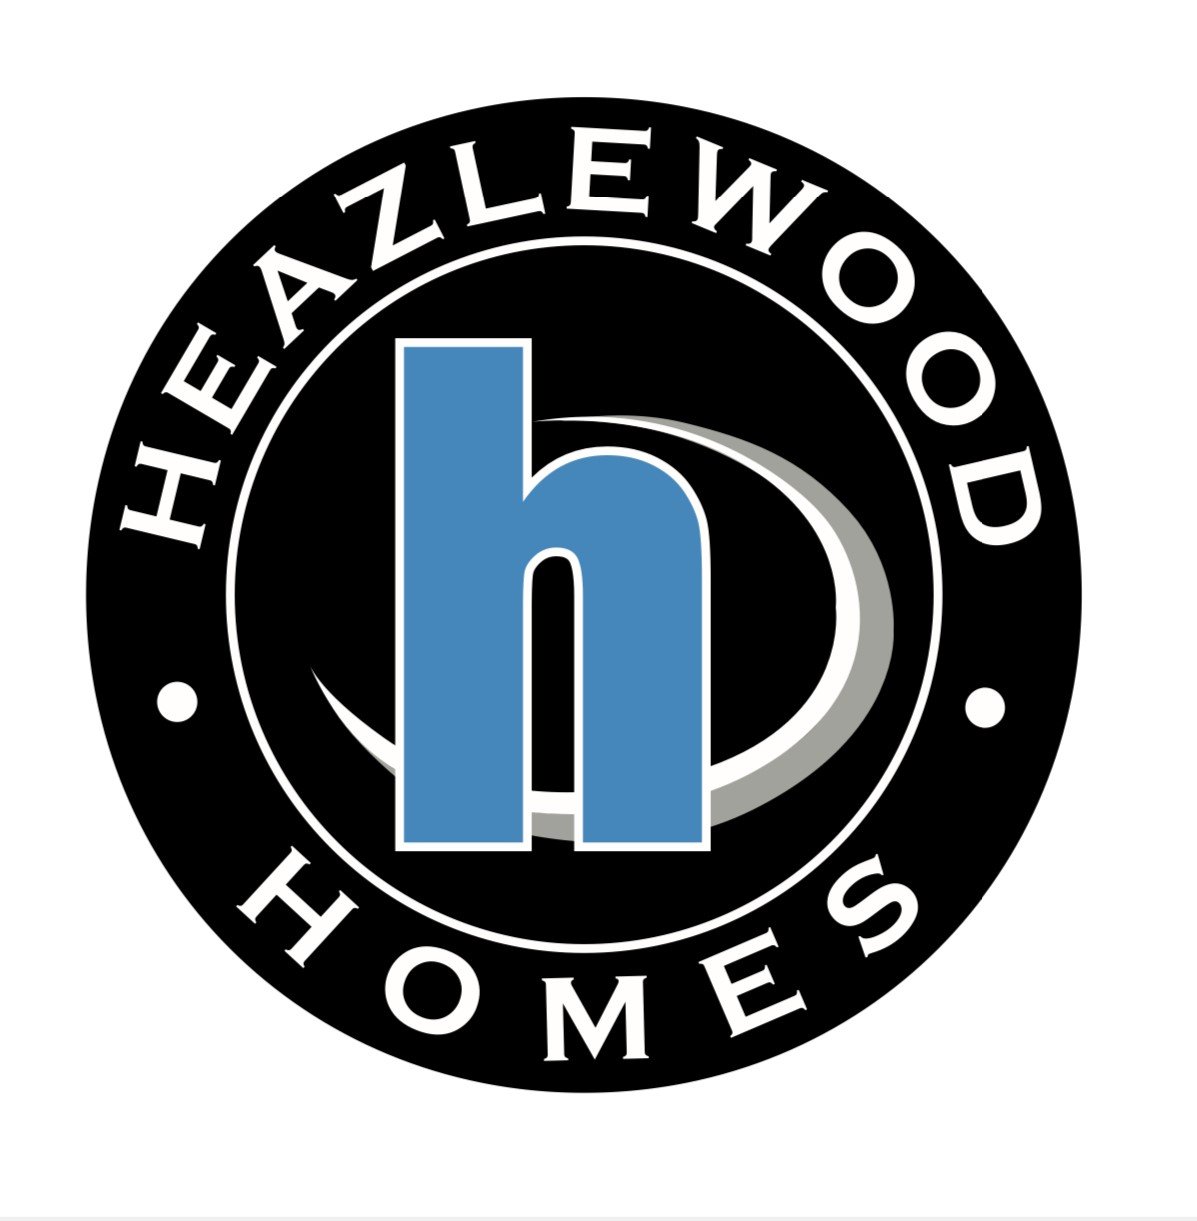 Heazlewood Homes